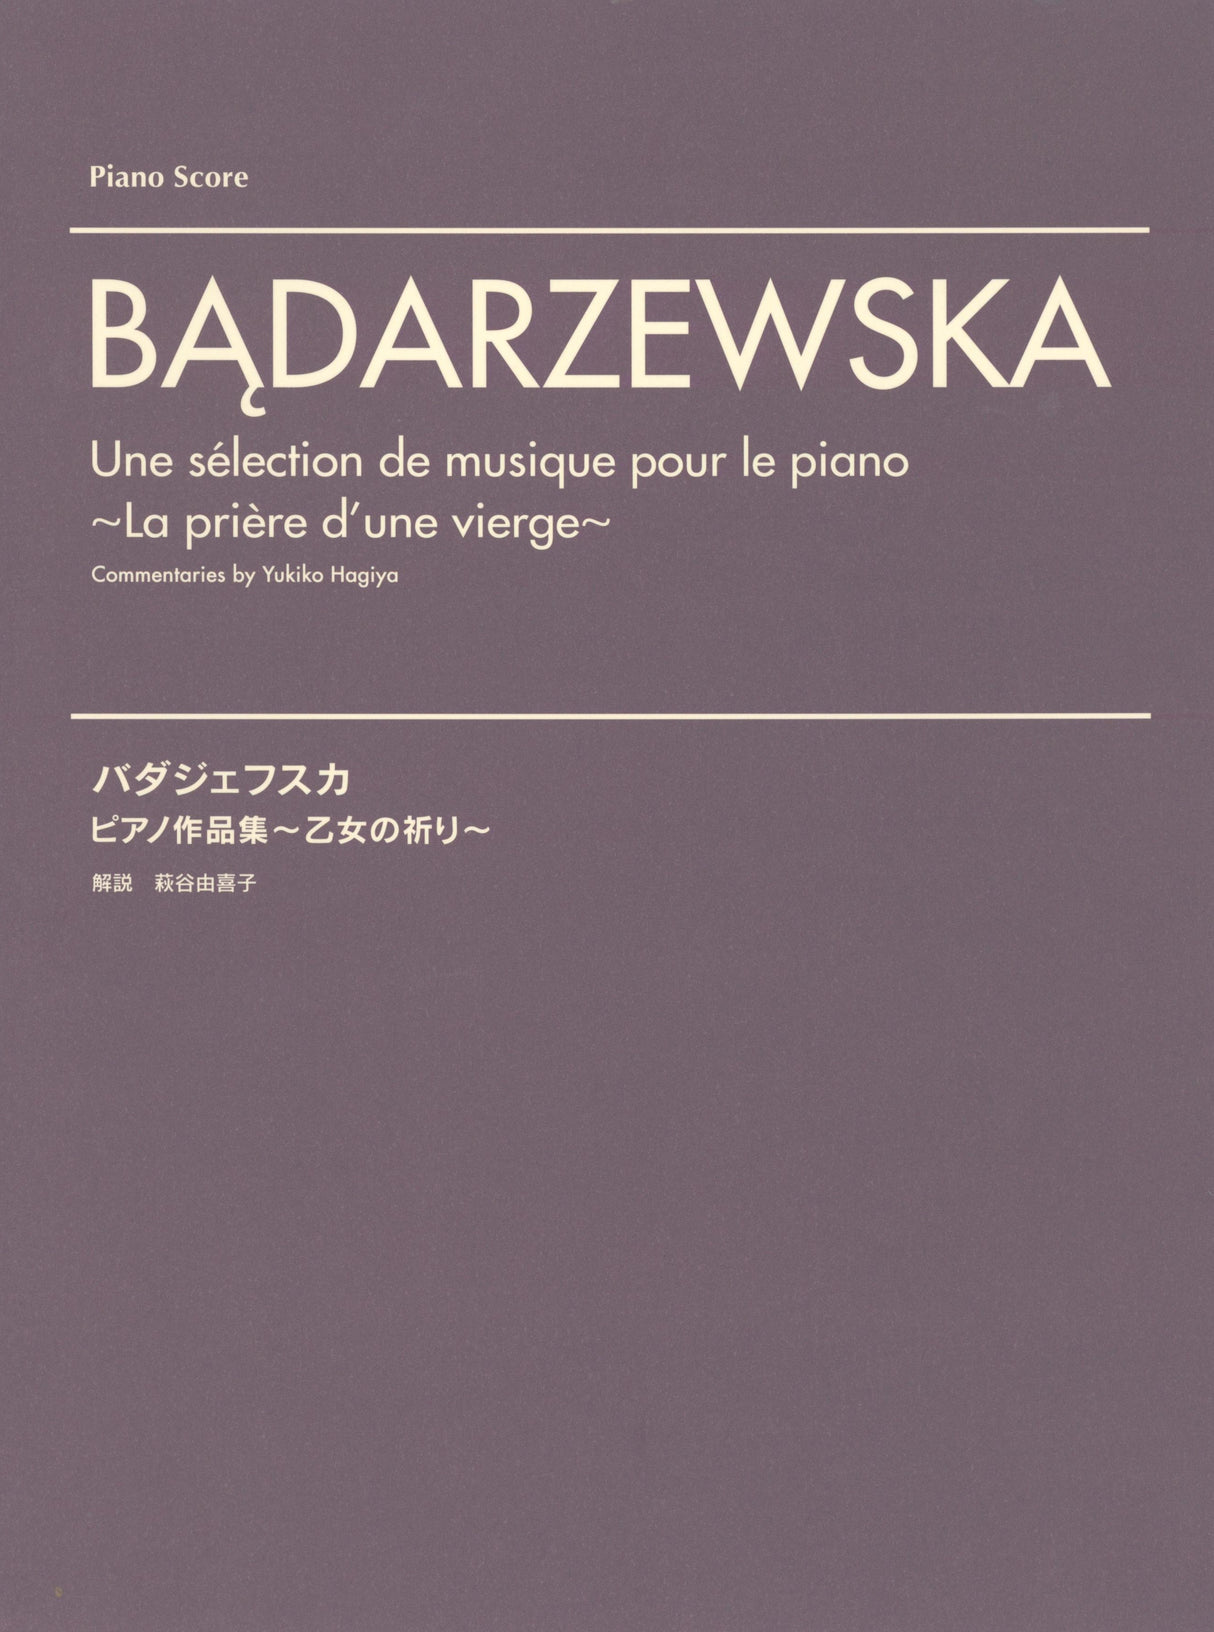 Bądarzewska-Baranowska: A Selection of Piano Music